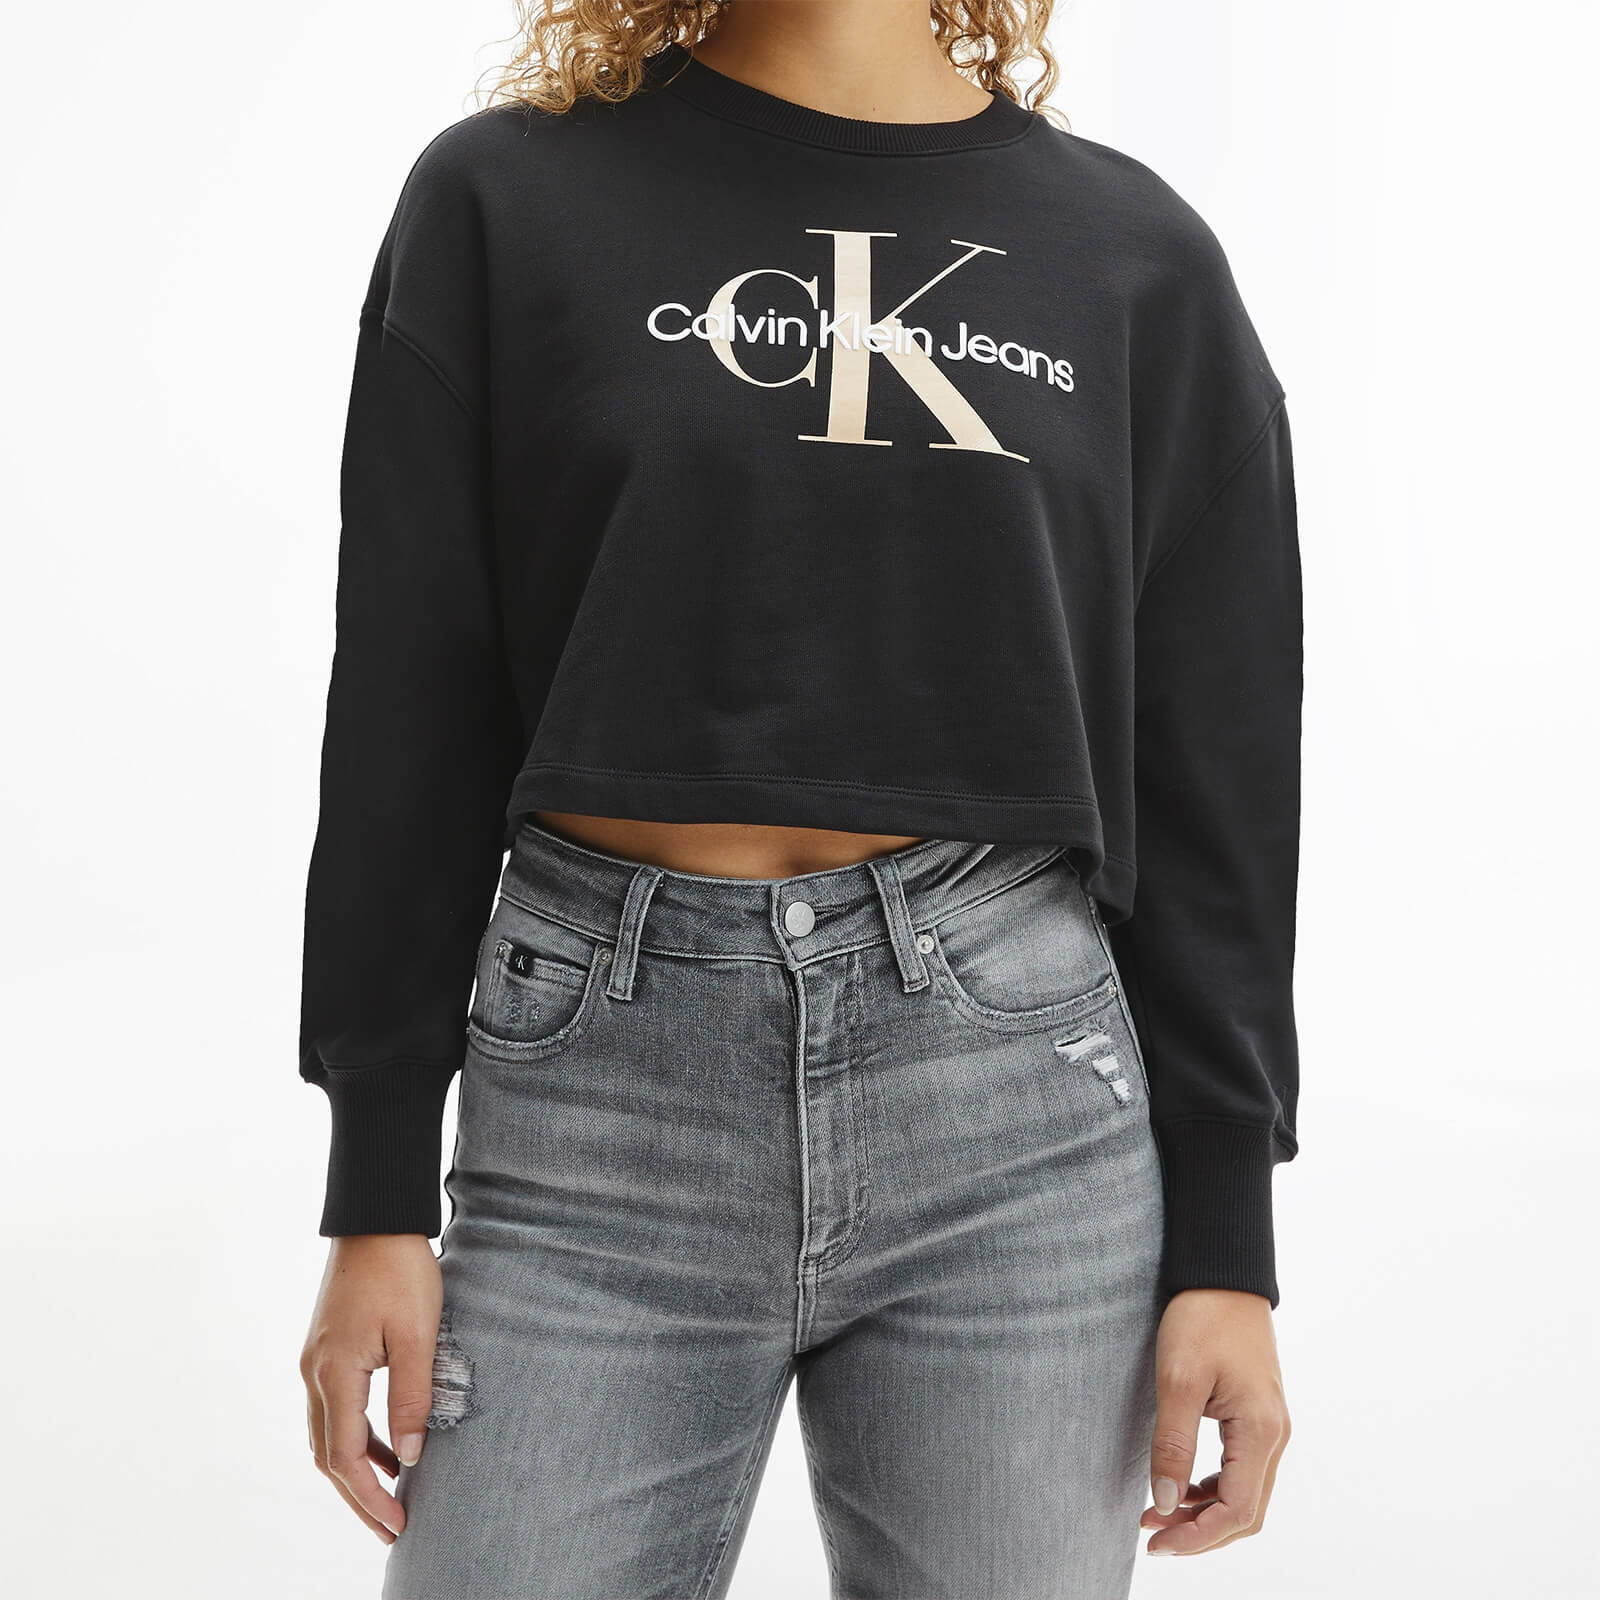 Calvin Klein Jeans Women's Seasonal Monogram Crew Neck Sweatshirt - Ck Black